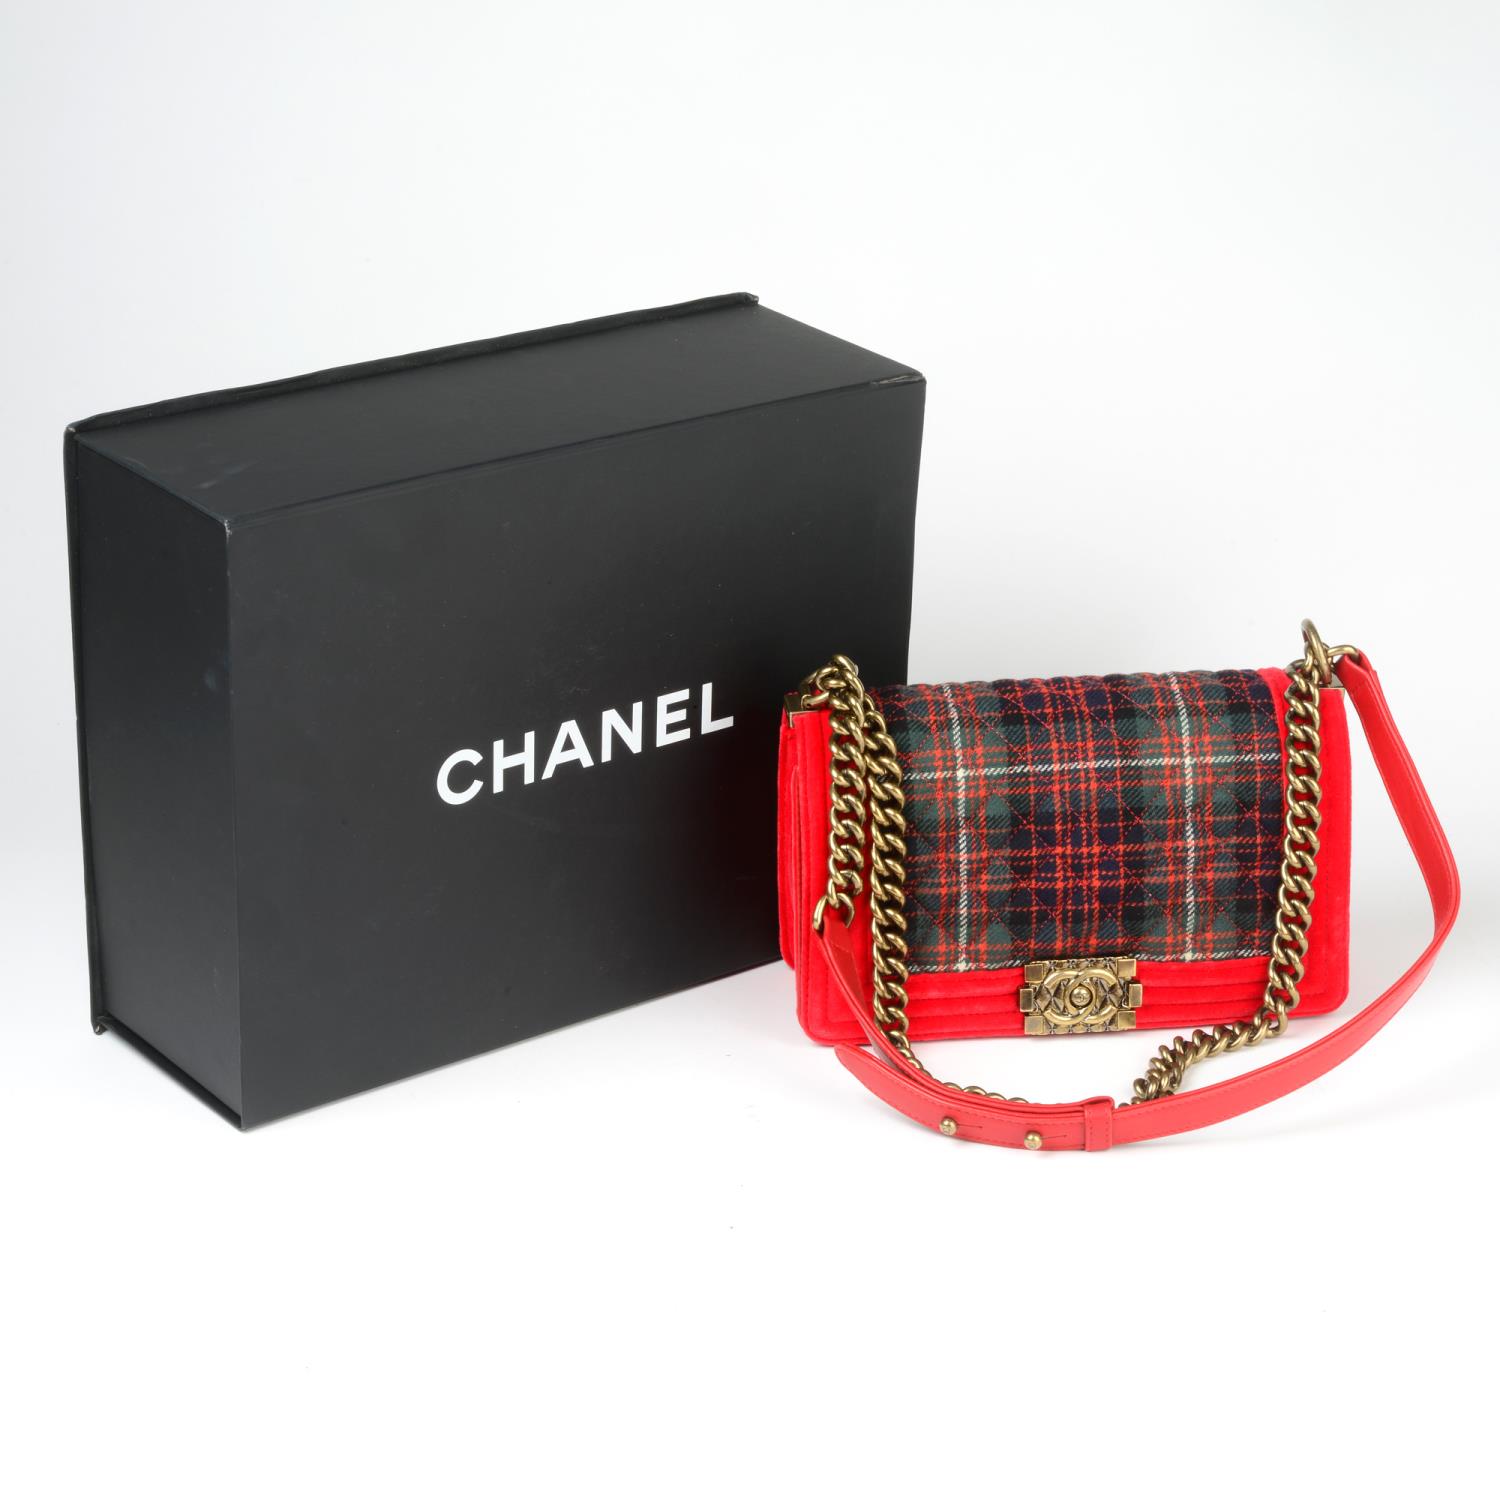 CHANEL - a Medium Velvet Tartan Paris-Edinburgh Boy Flap handbag. - Image 4 of 4